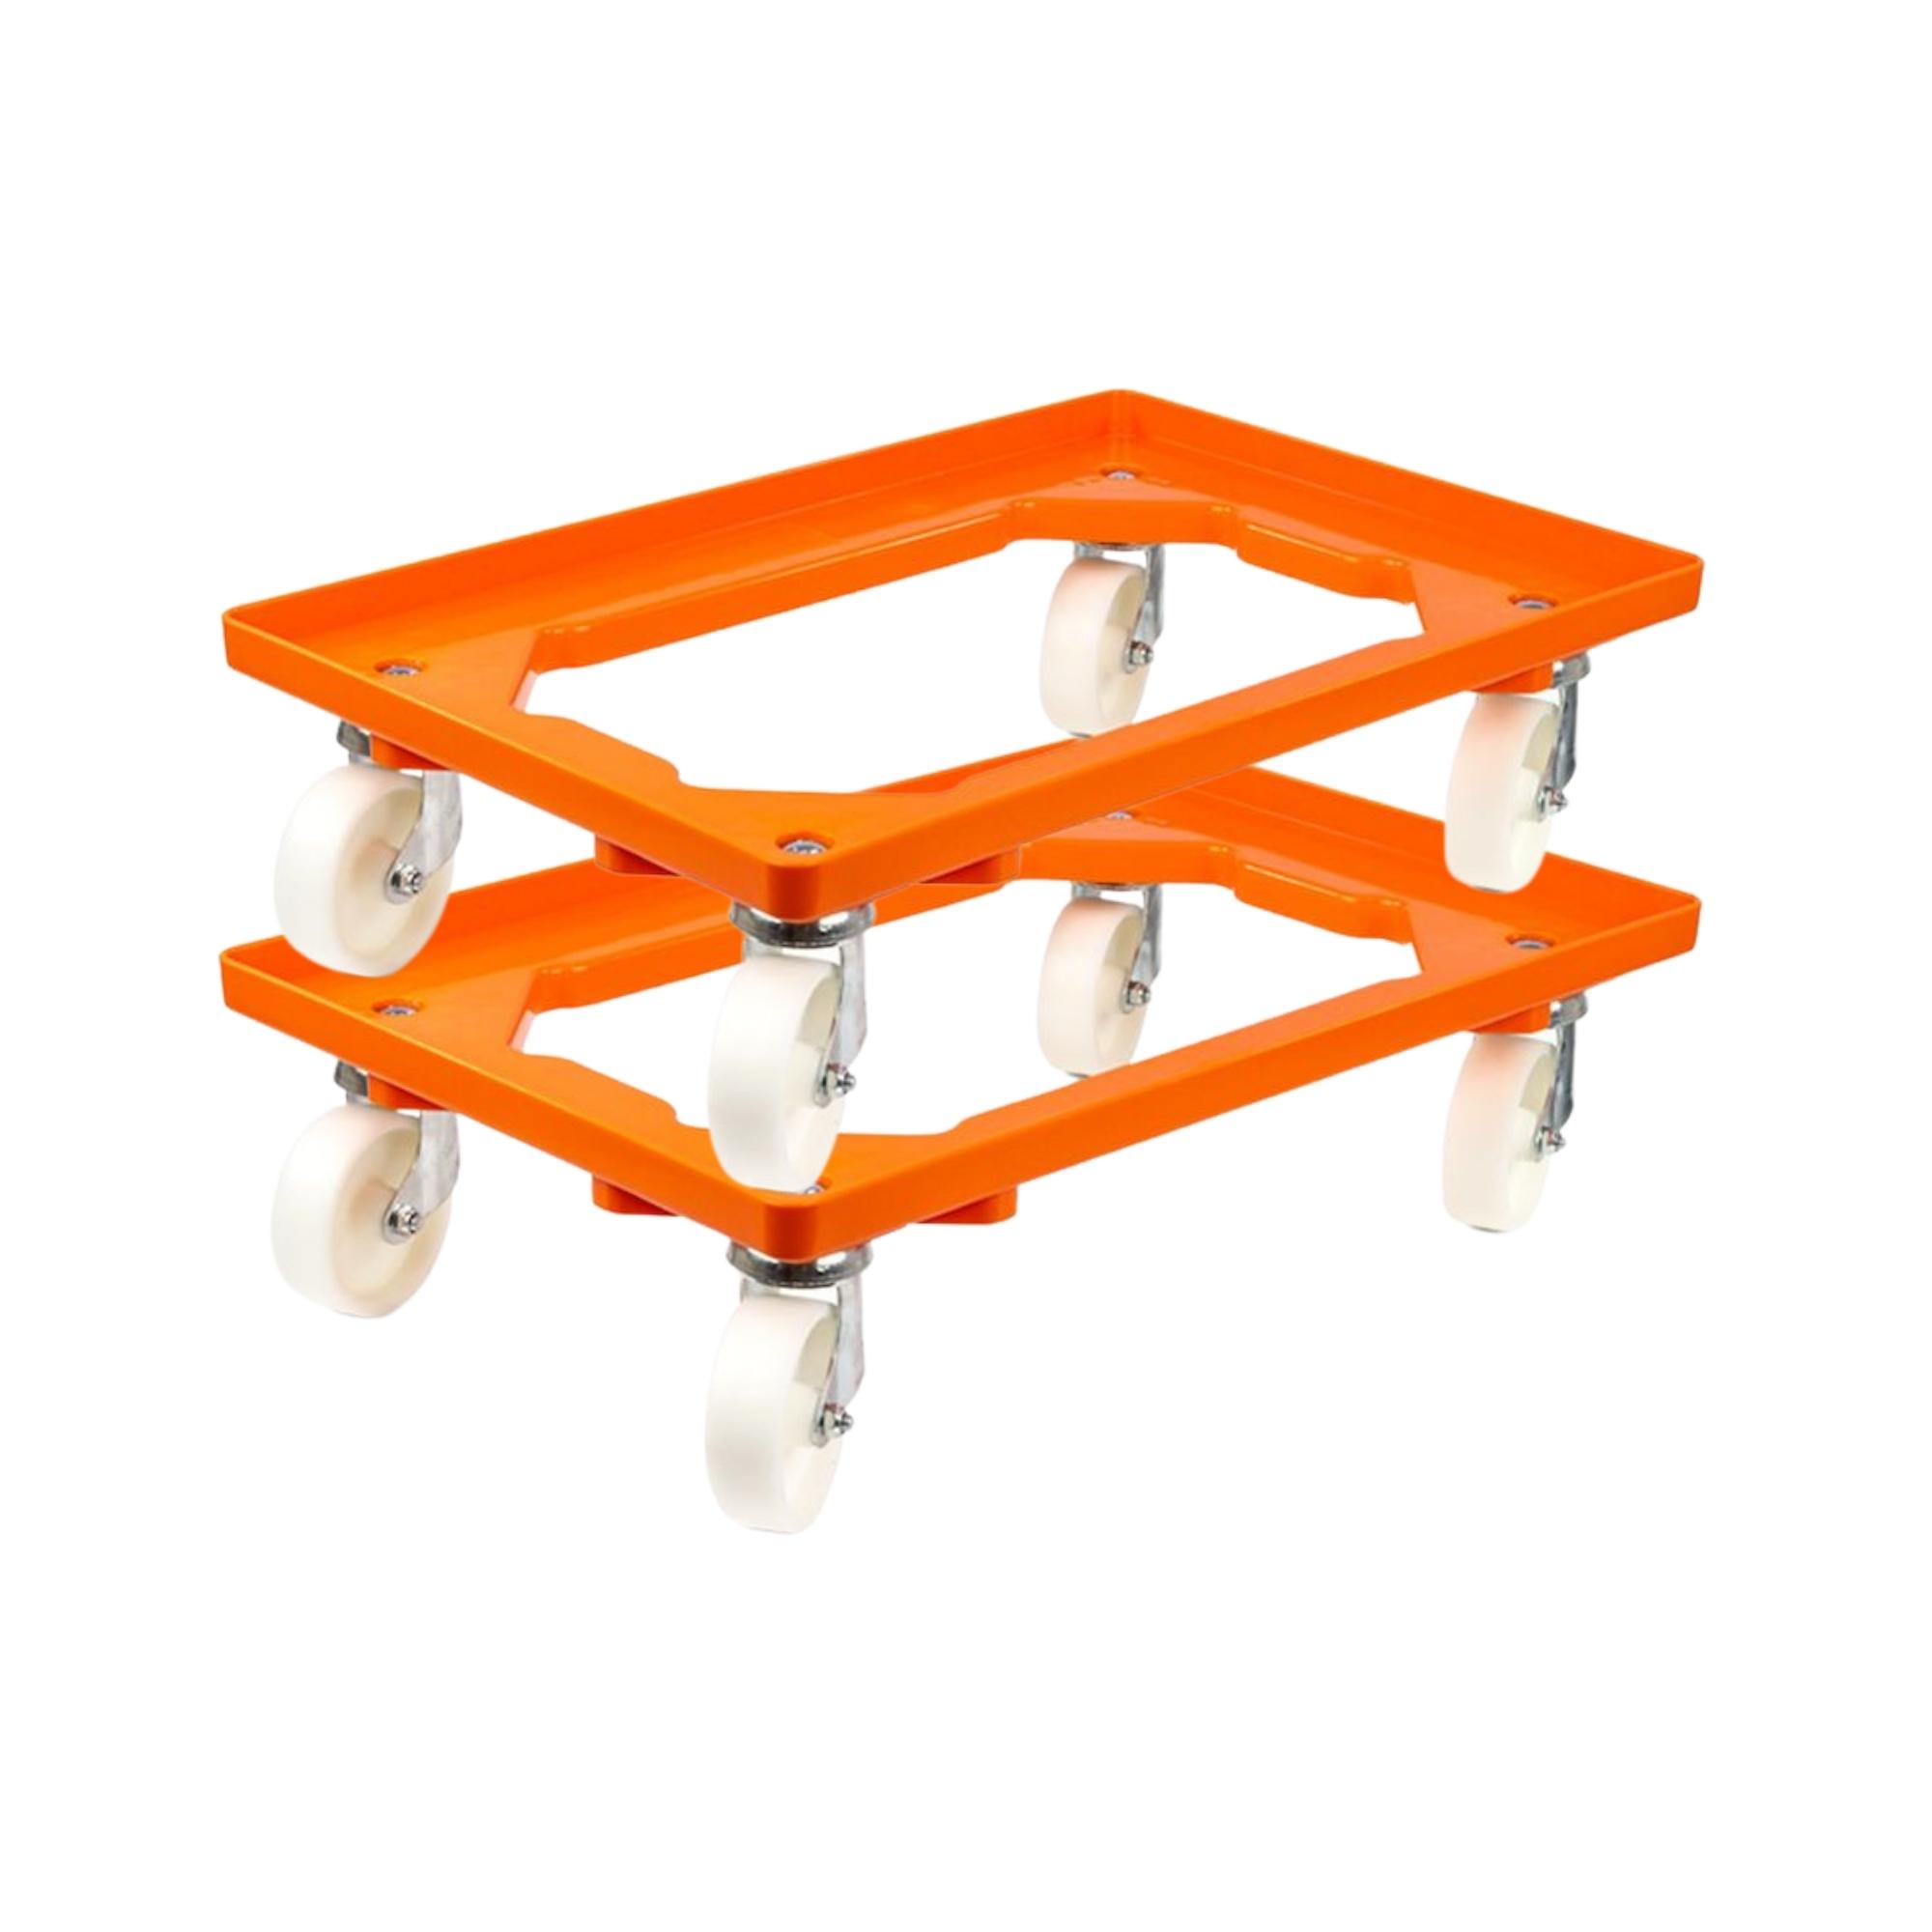 SparSet 2x Transportroller für Euroboxen 60x40cm mit Kunststoffräder orange | Offenes Deck | 2 Lenkrollen & 2 Bockrollen | Traglast 300kg | Kistenroller Logistikroller Rollwagen Profi-Fahrgestell